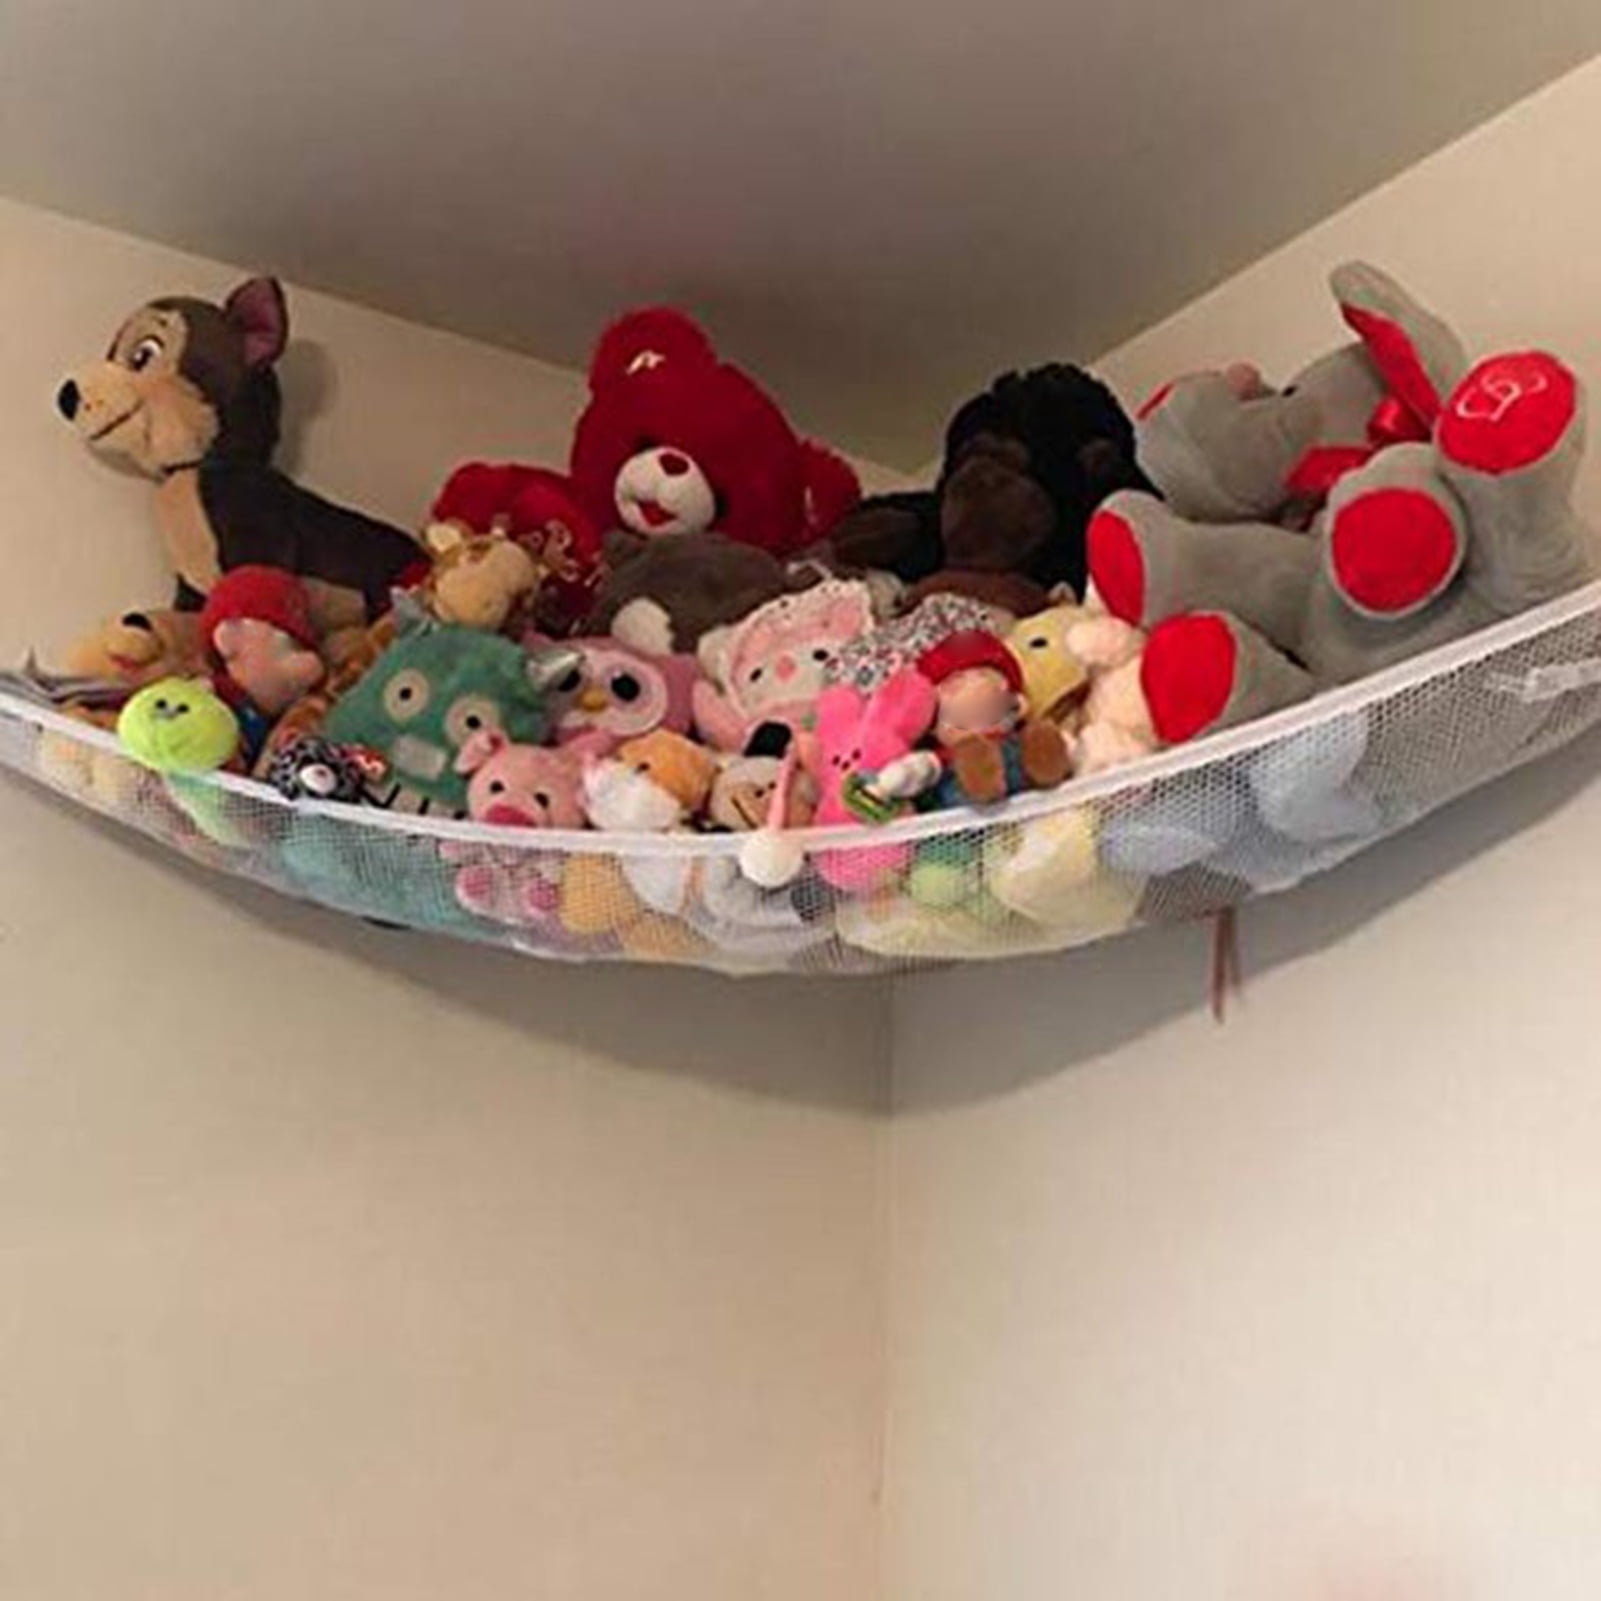 Large Stuffed Animals Jumbo Organizer Hanging Mesh Net for Children Kids Toys Room Yuccer Toy Storage Hammock Pink, 7ft